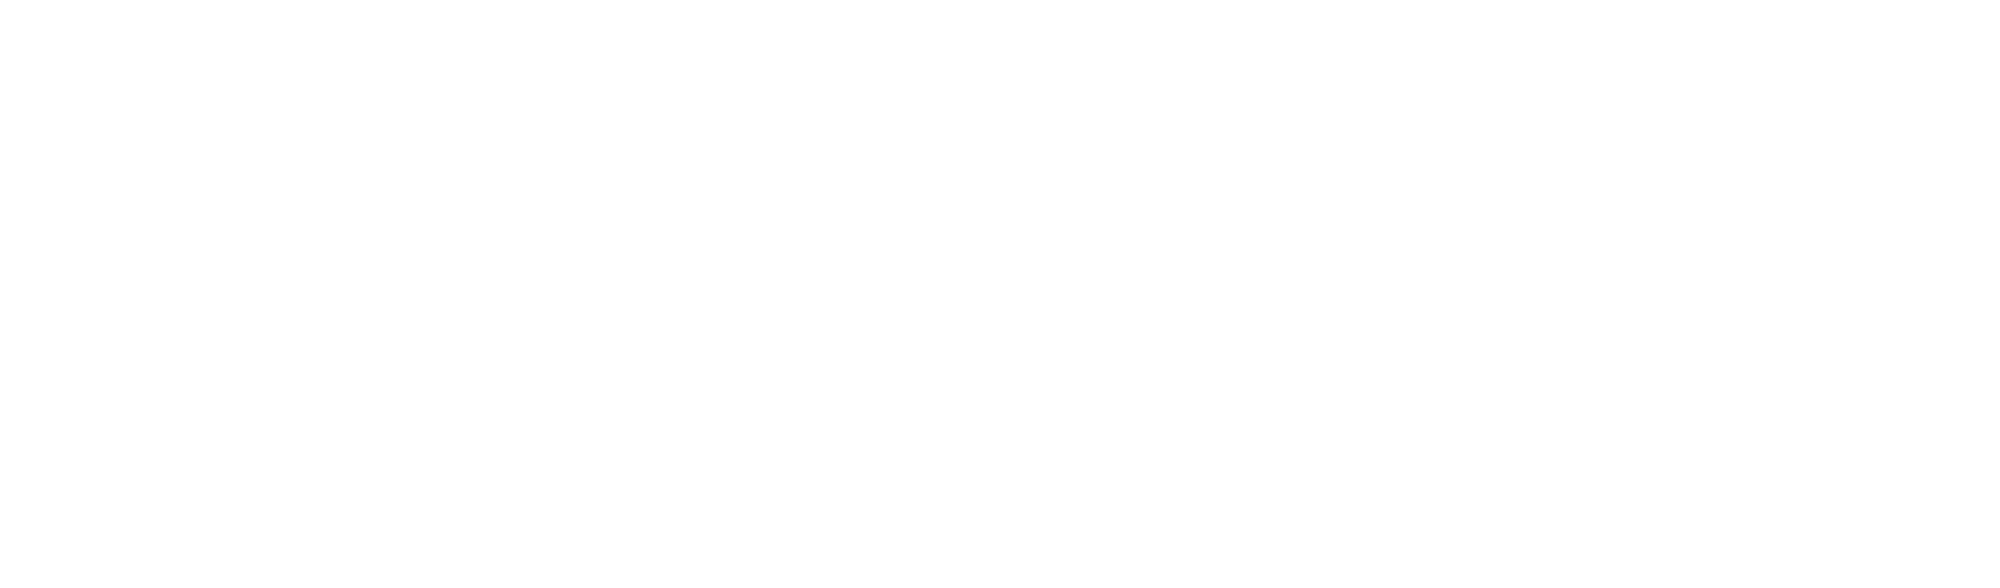 chatgpt logo with name